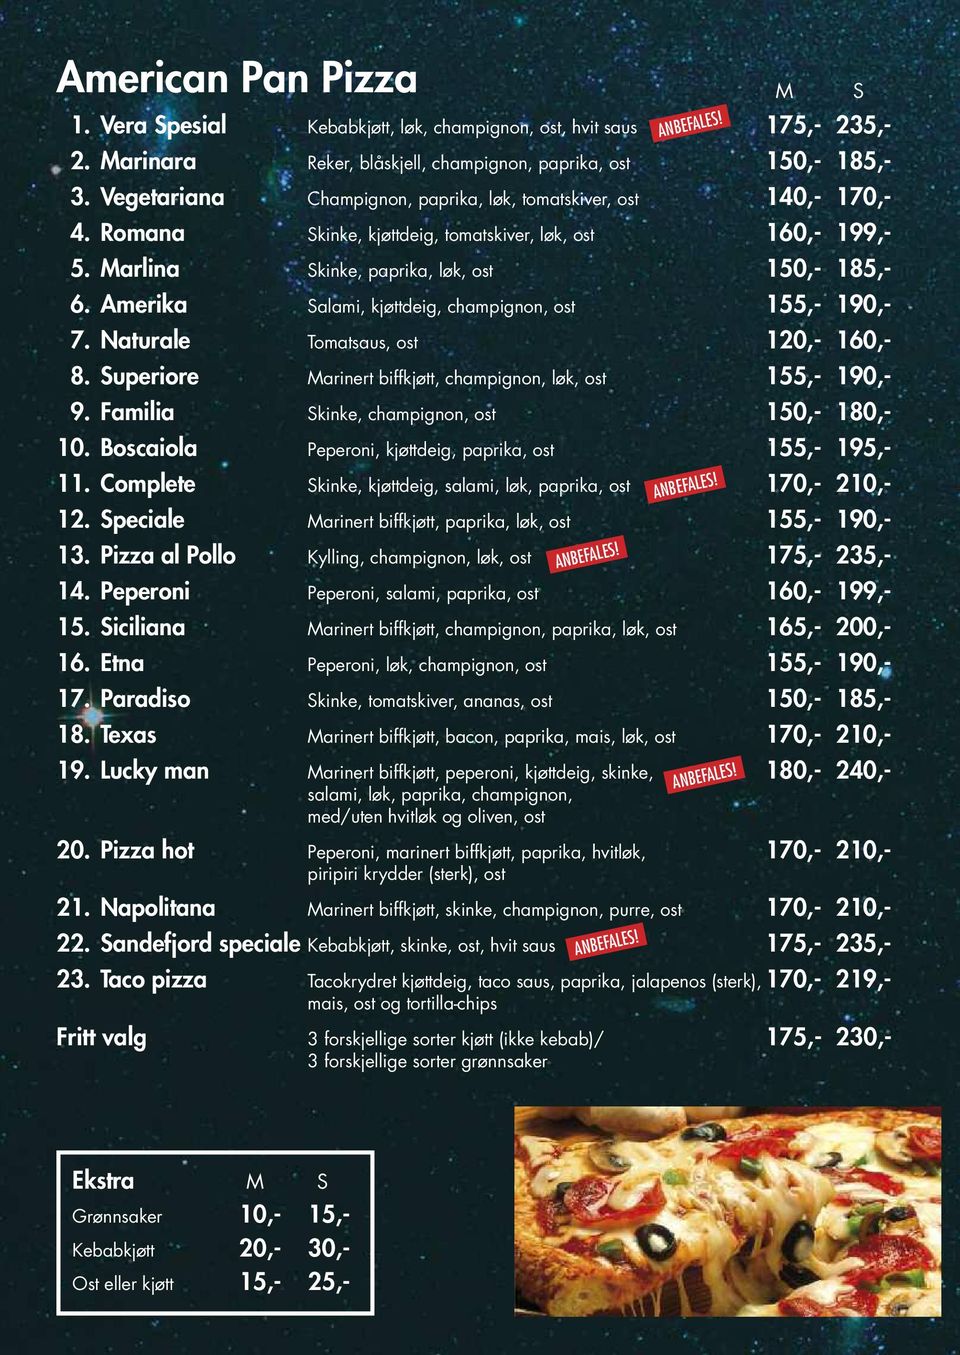 Amerika Salami, kjøttdeig, champignon, ost 155,- 190,- 7. Naturale Tomatsaus, ost 120,- 160,- 8. Superiore Marinert biffkjøtt, champignon, løk, ost 155,- 190,- 9.